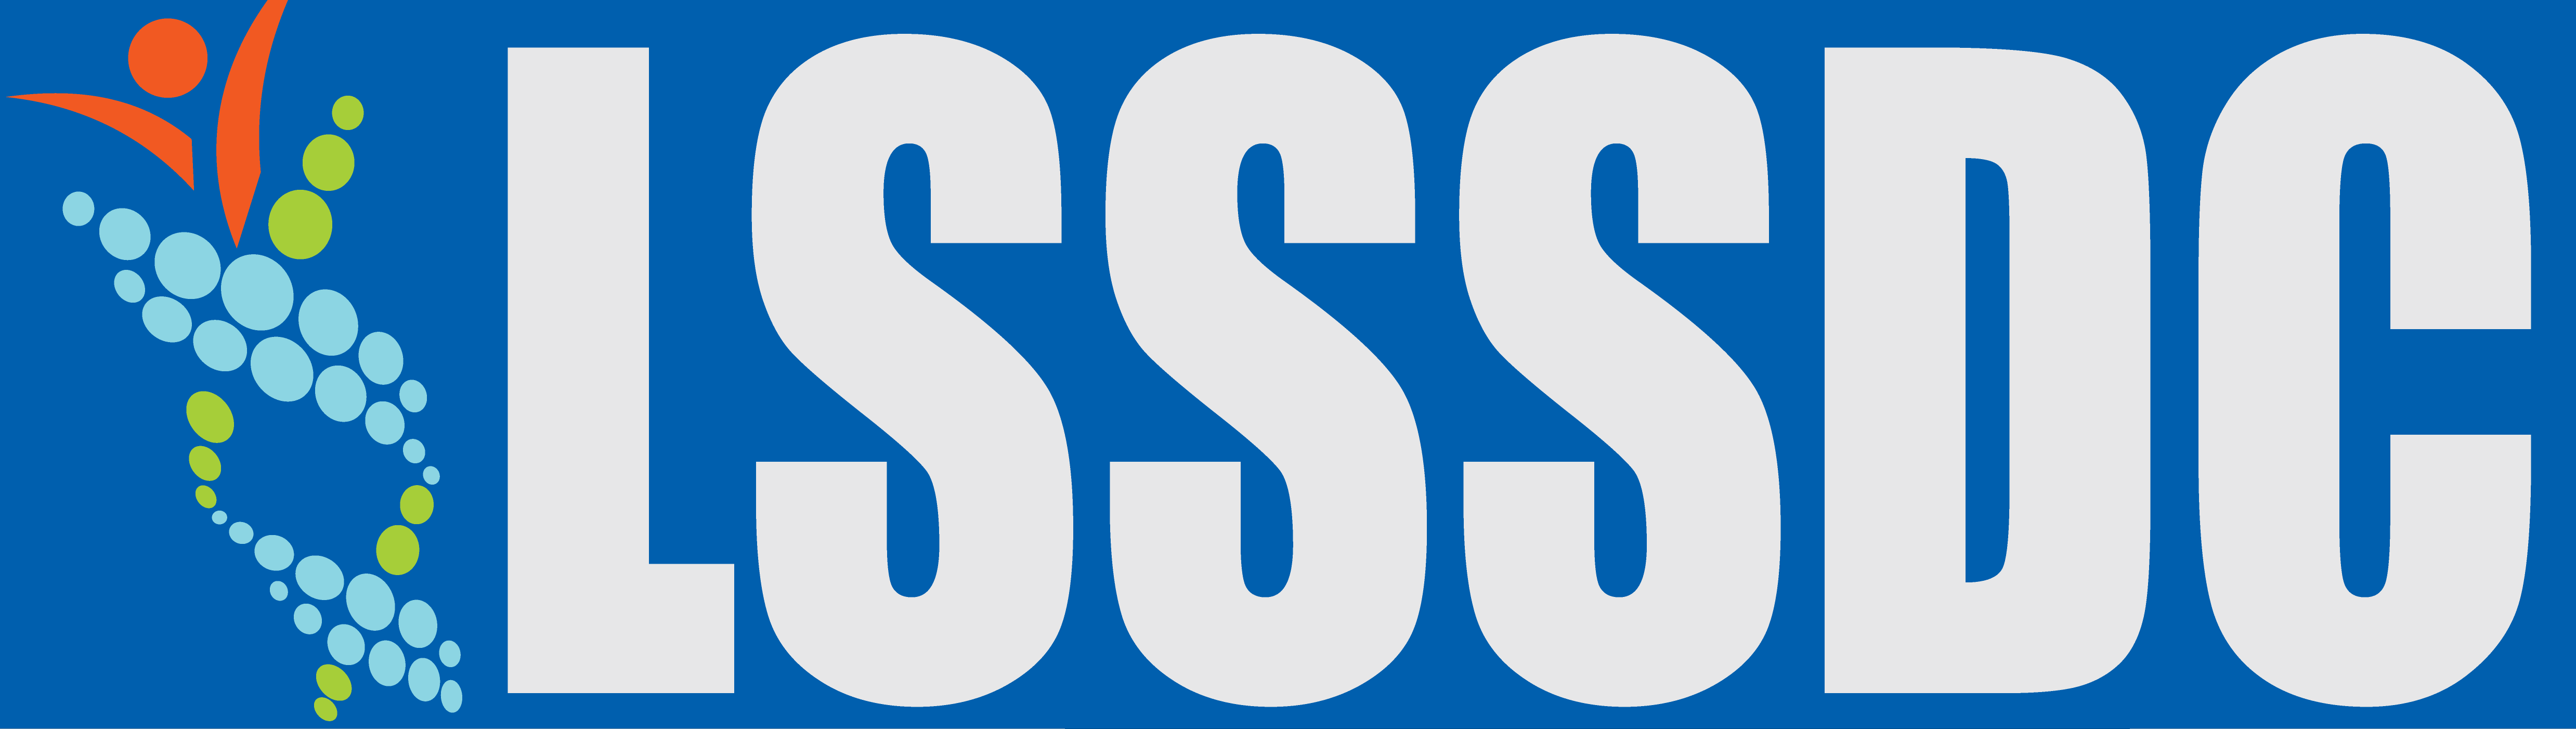 lsssdc logo